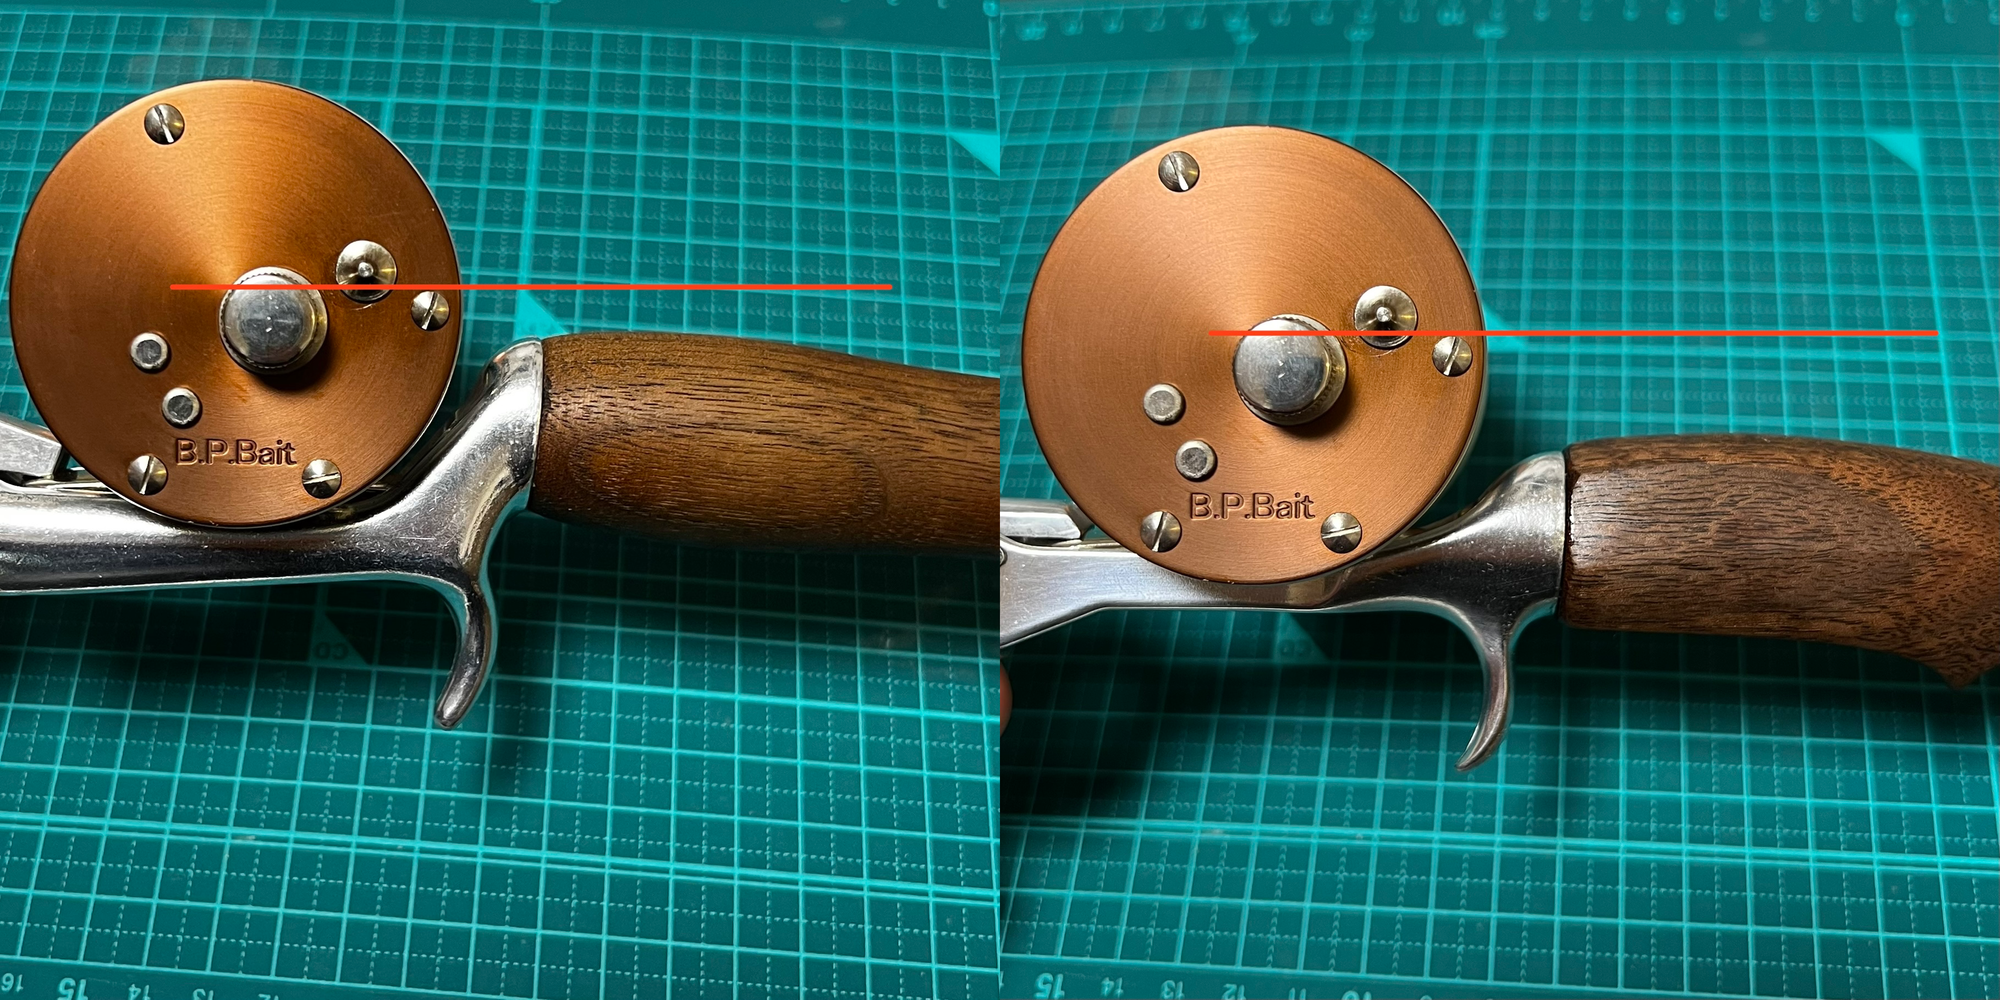 Installing wood fishing grip to blank